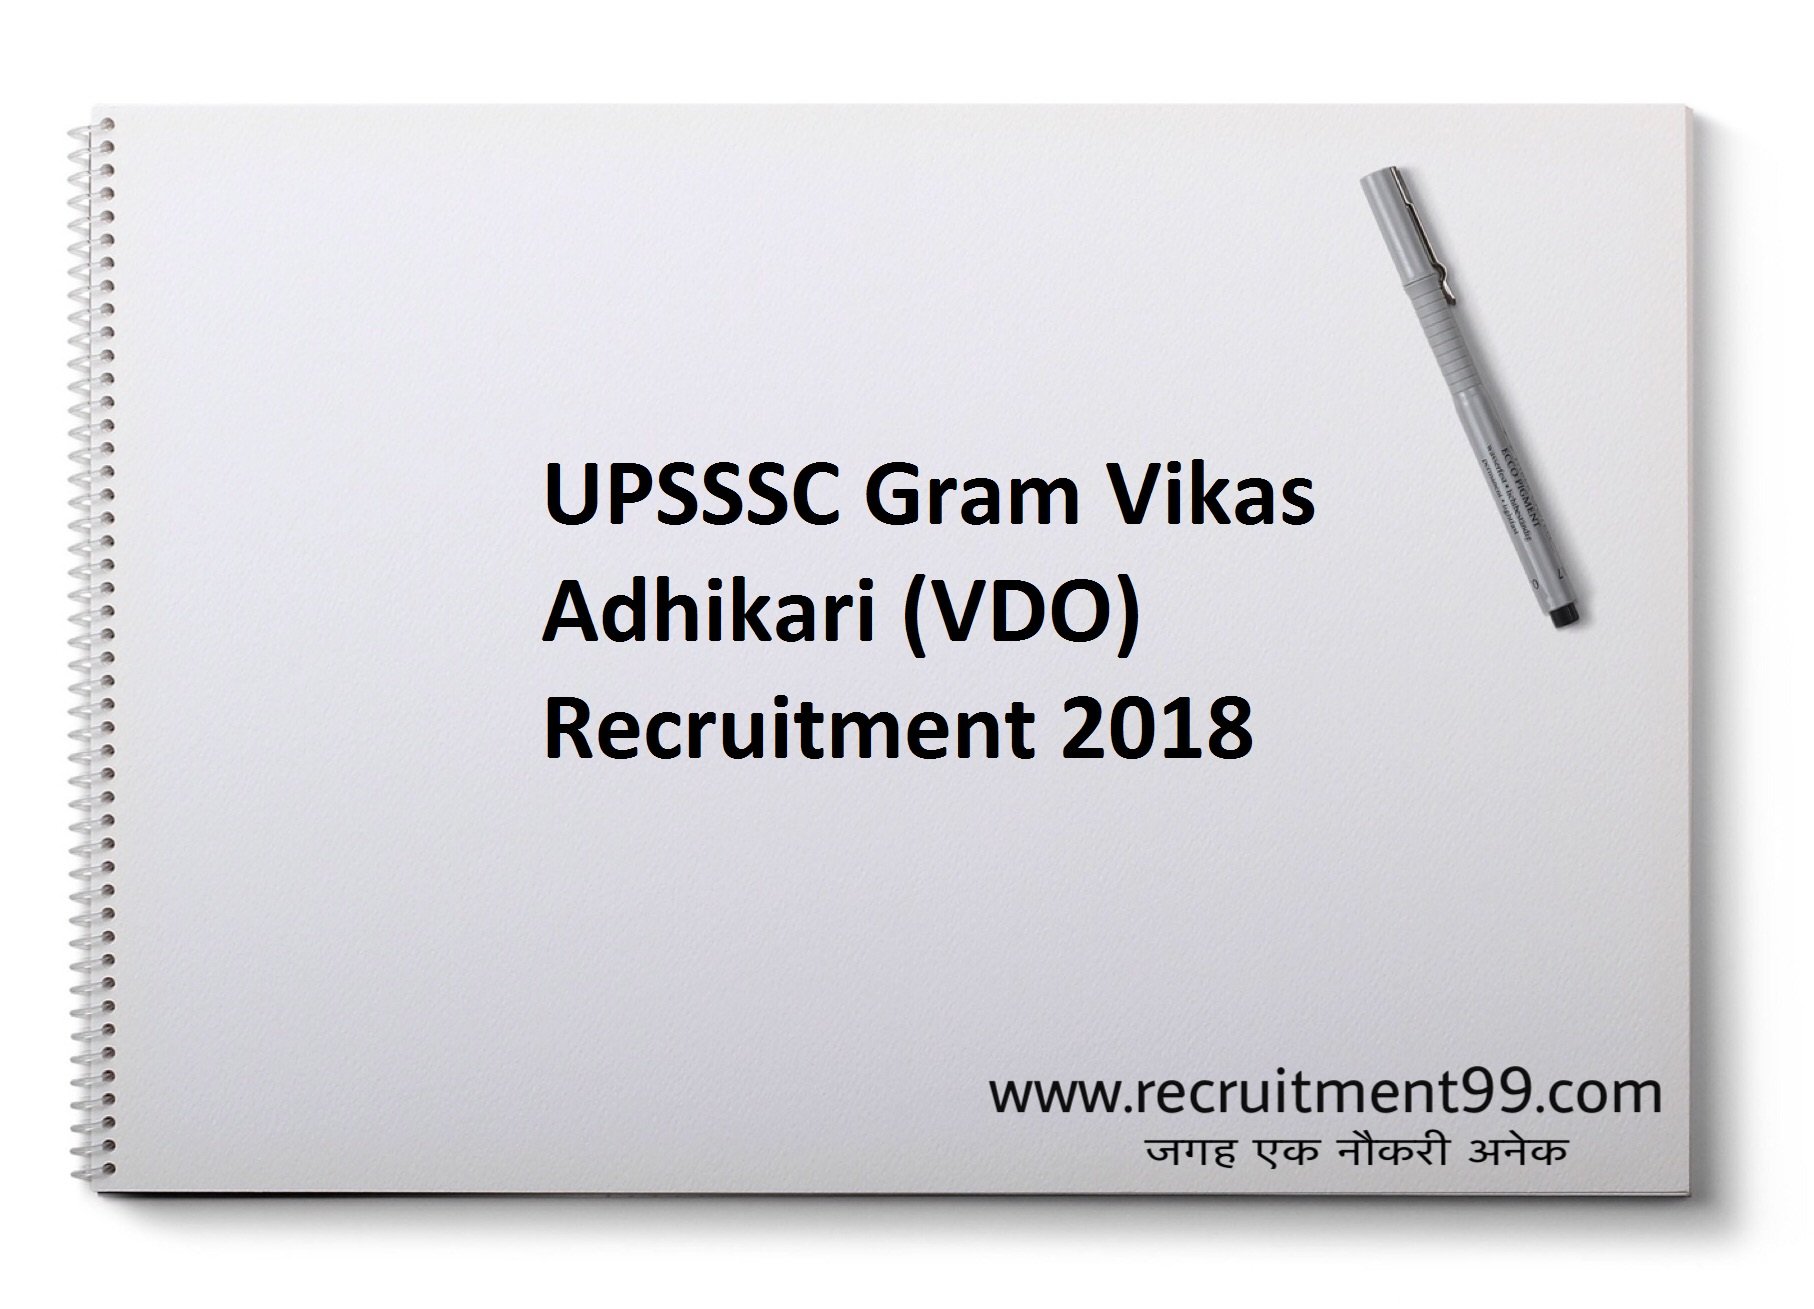 UPSSSC VDO Recruitment Admit Card Result 2018